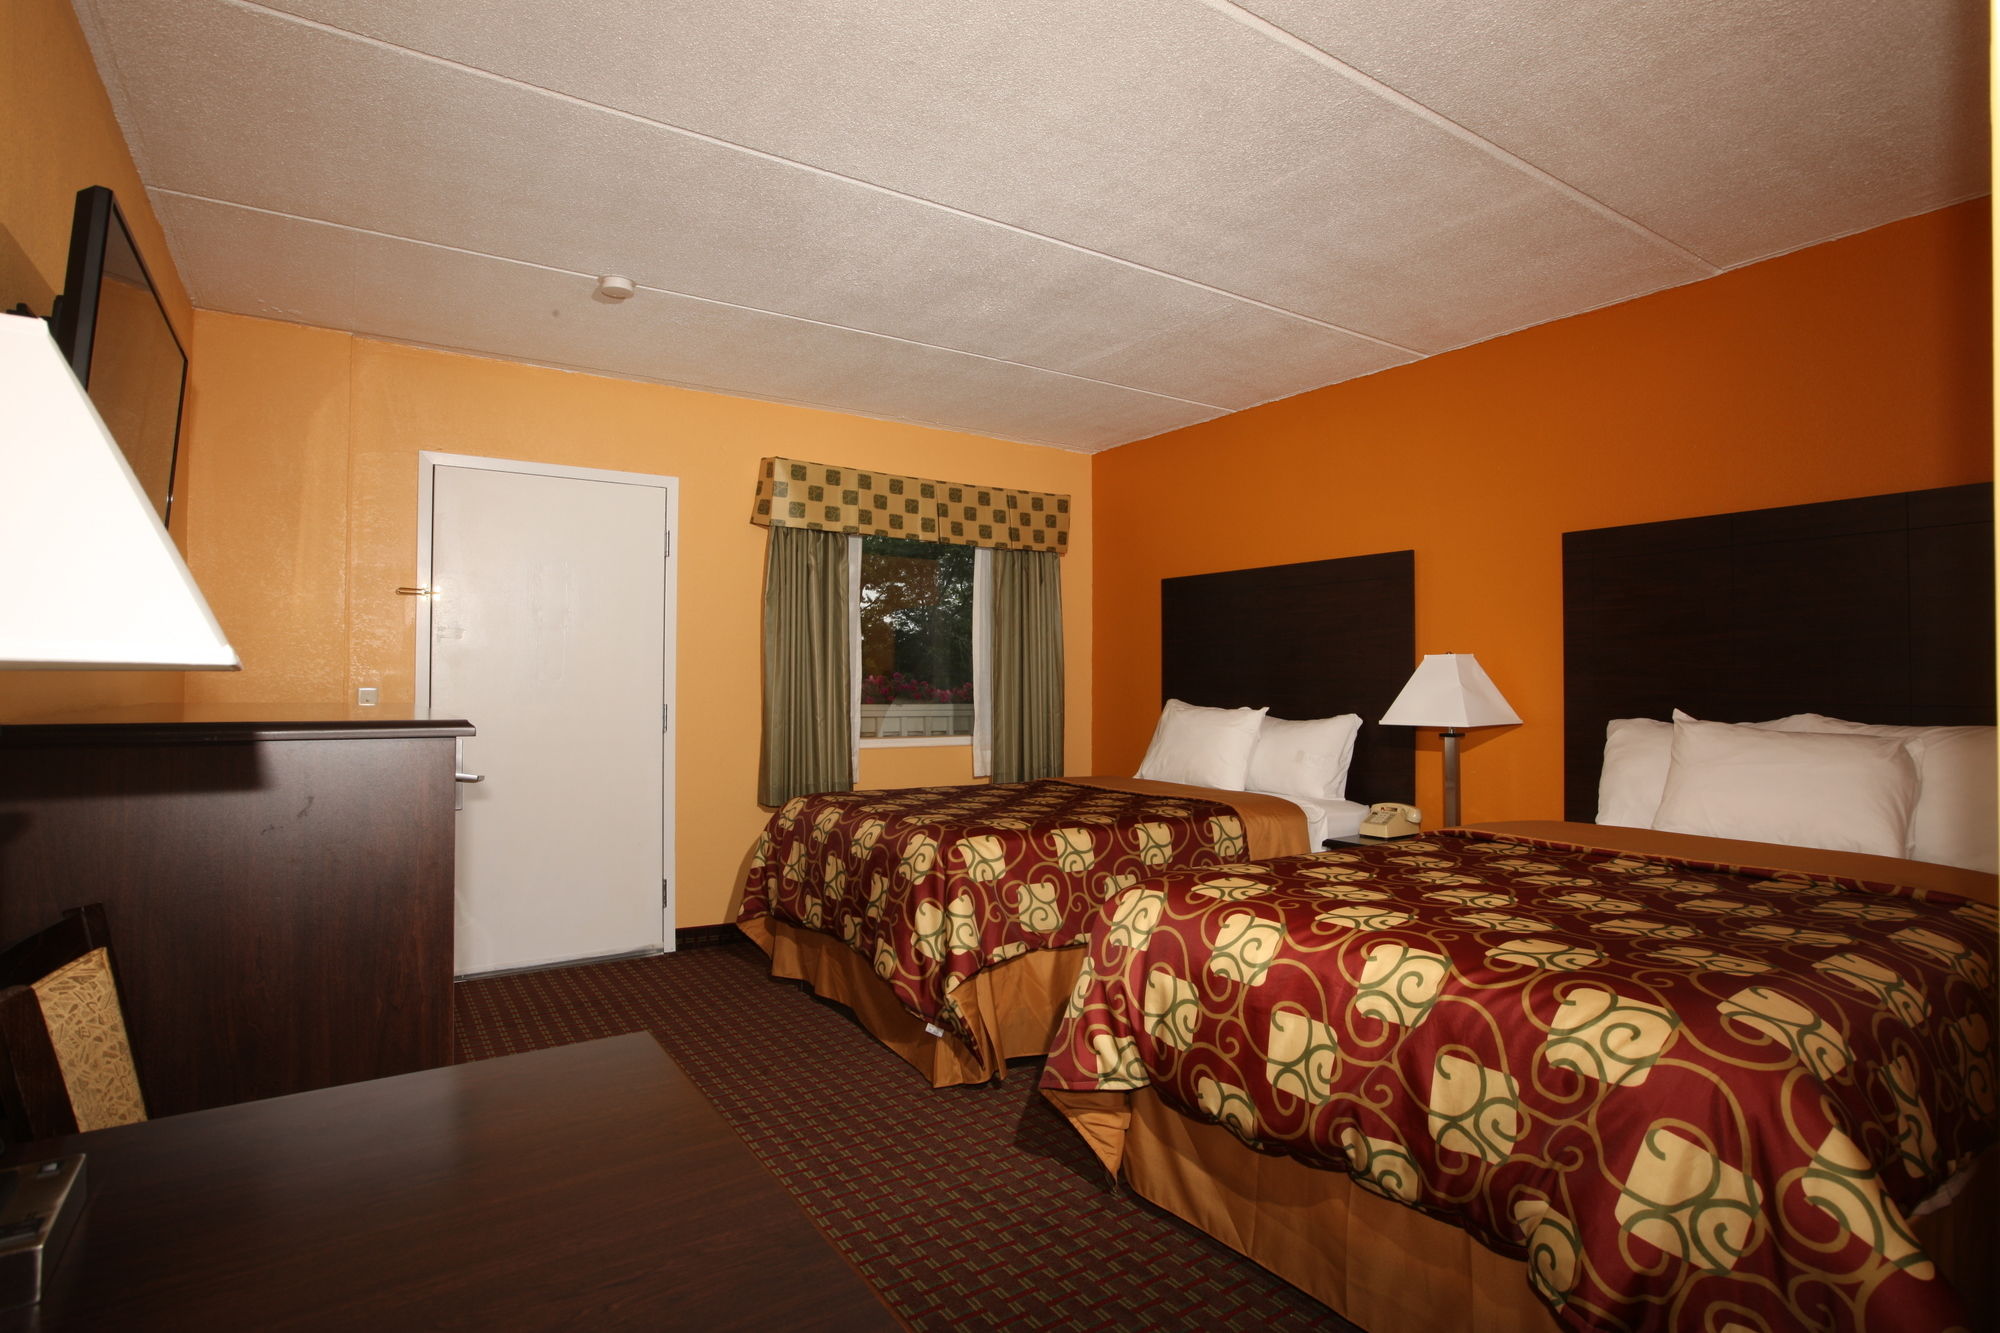 Budgetel Inn & Suites Glens Falls